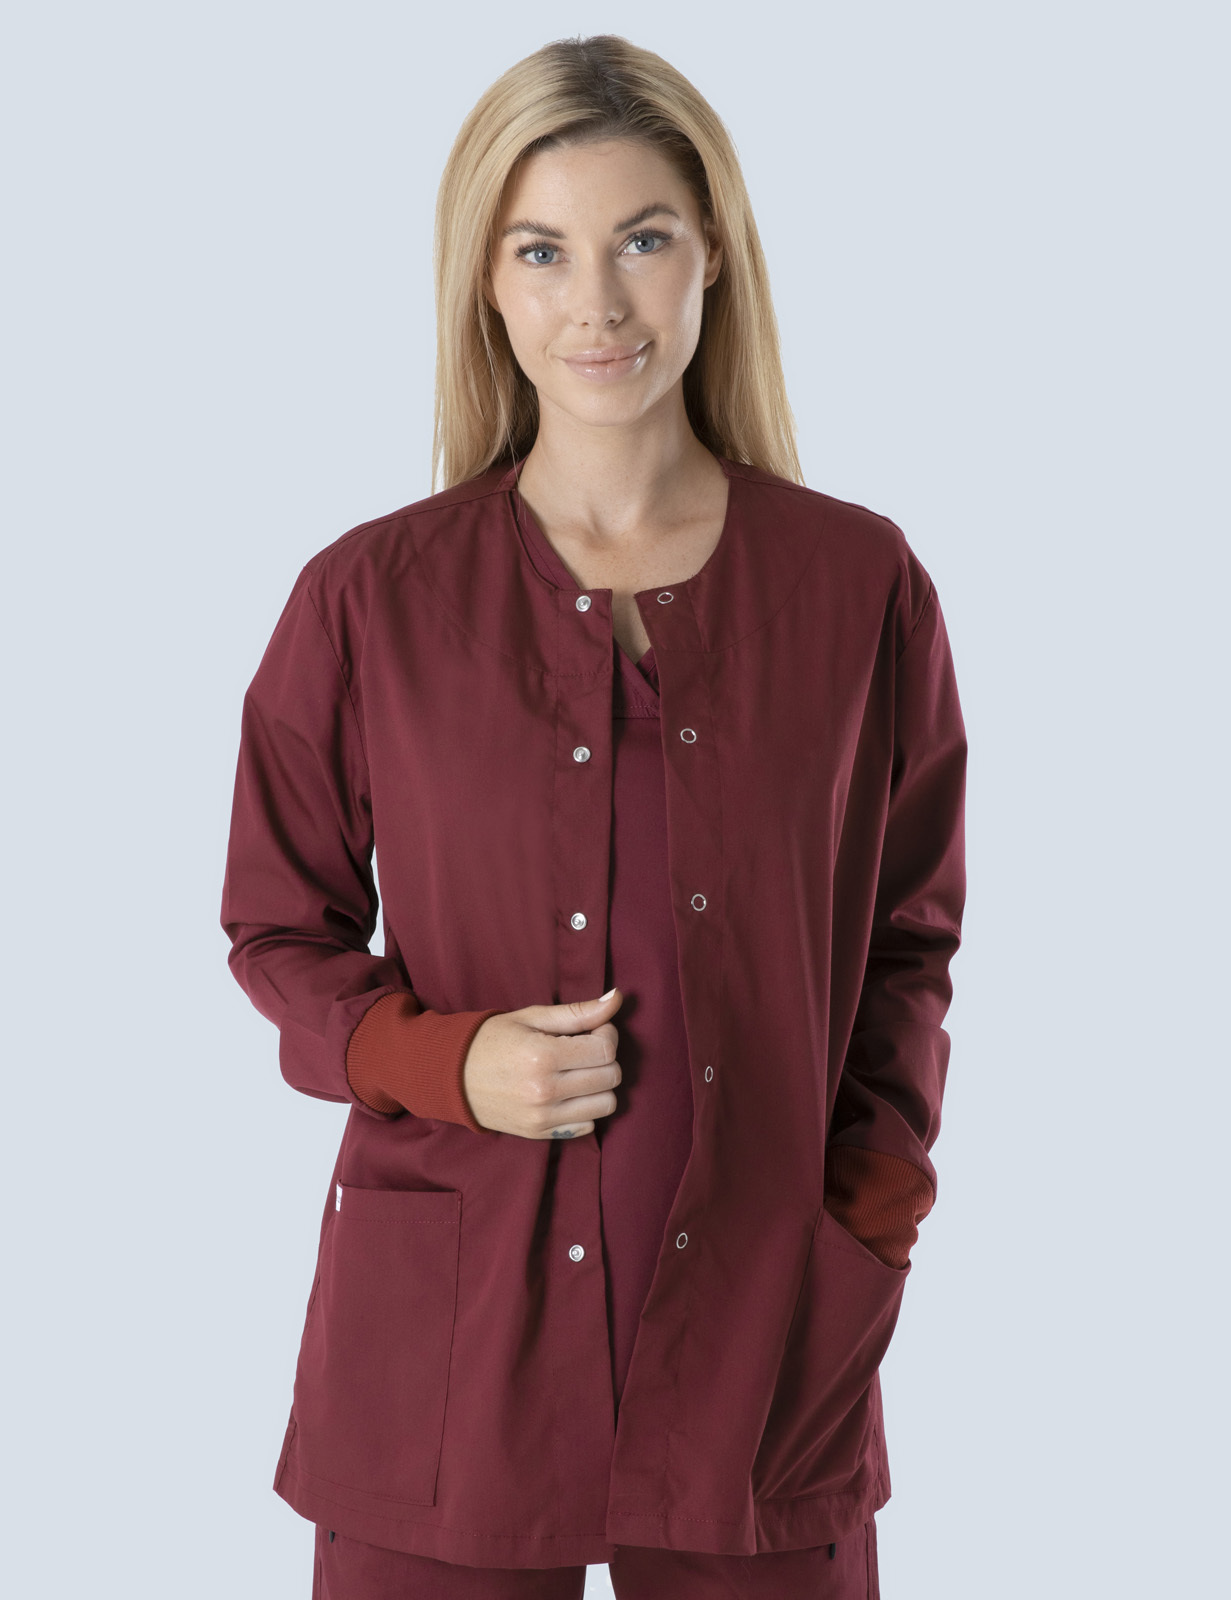 Women's Scrub Jacket - Burgundy - Small